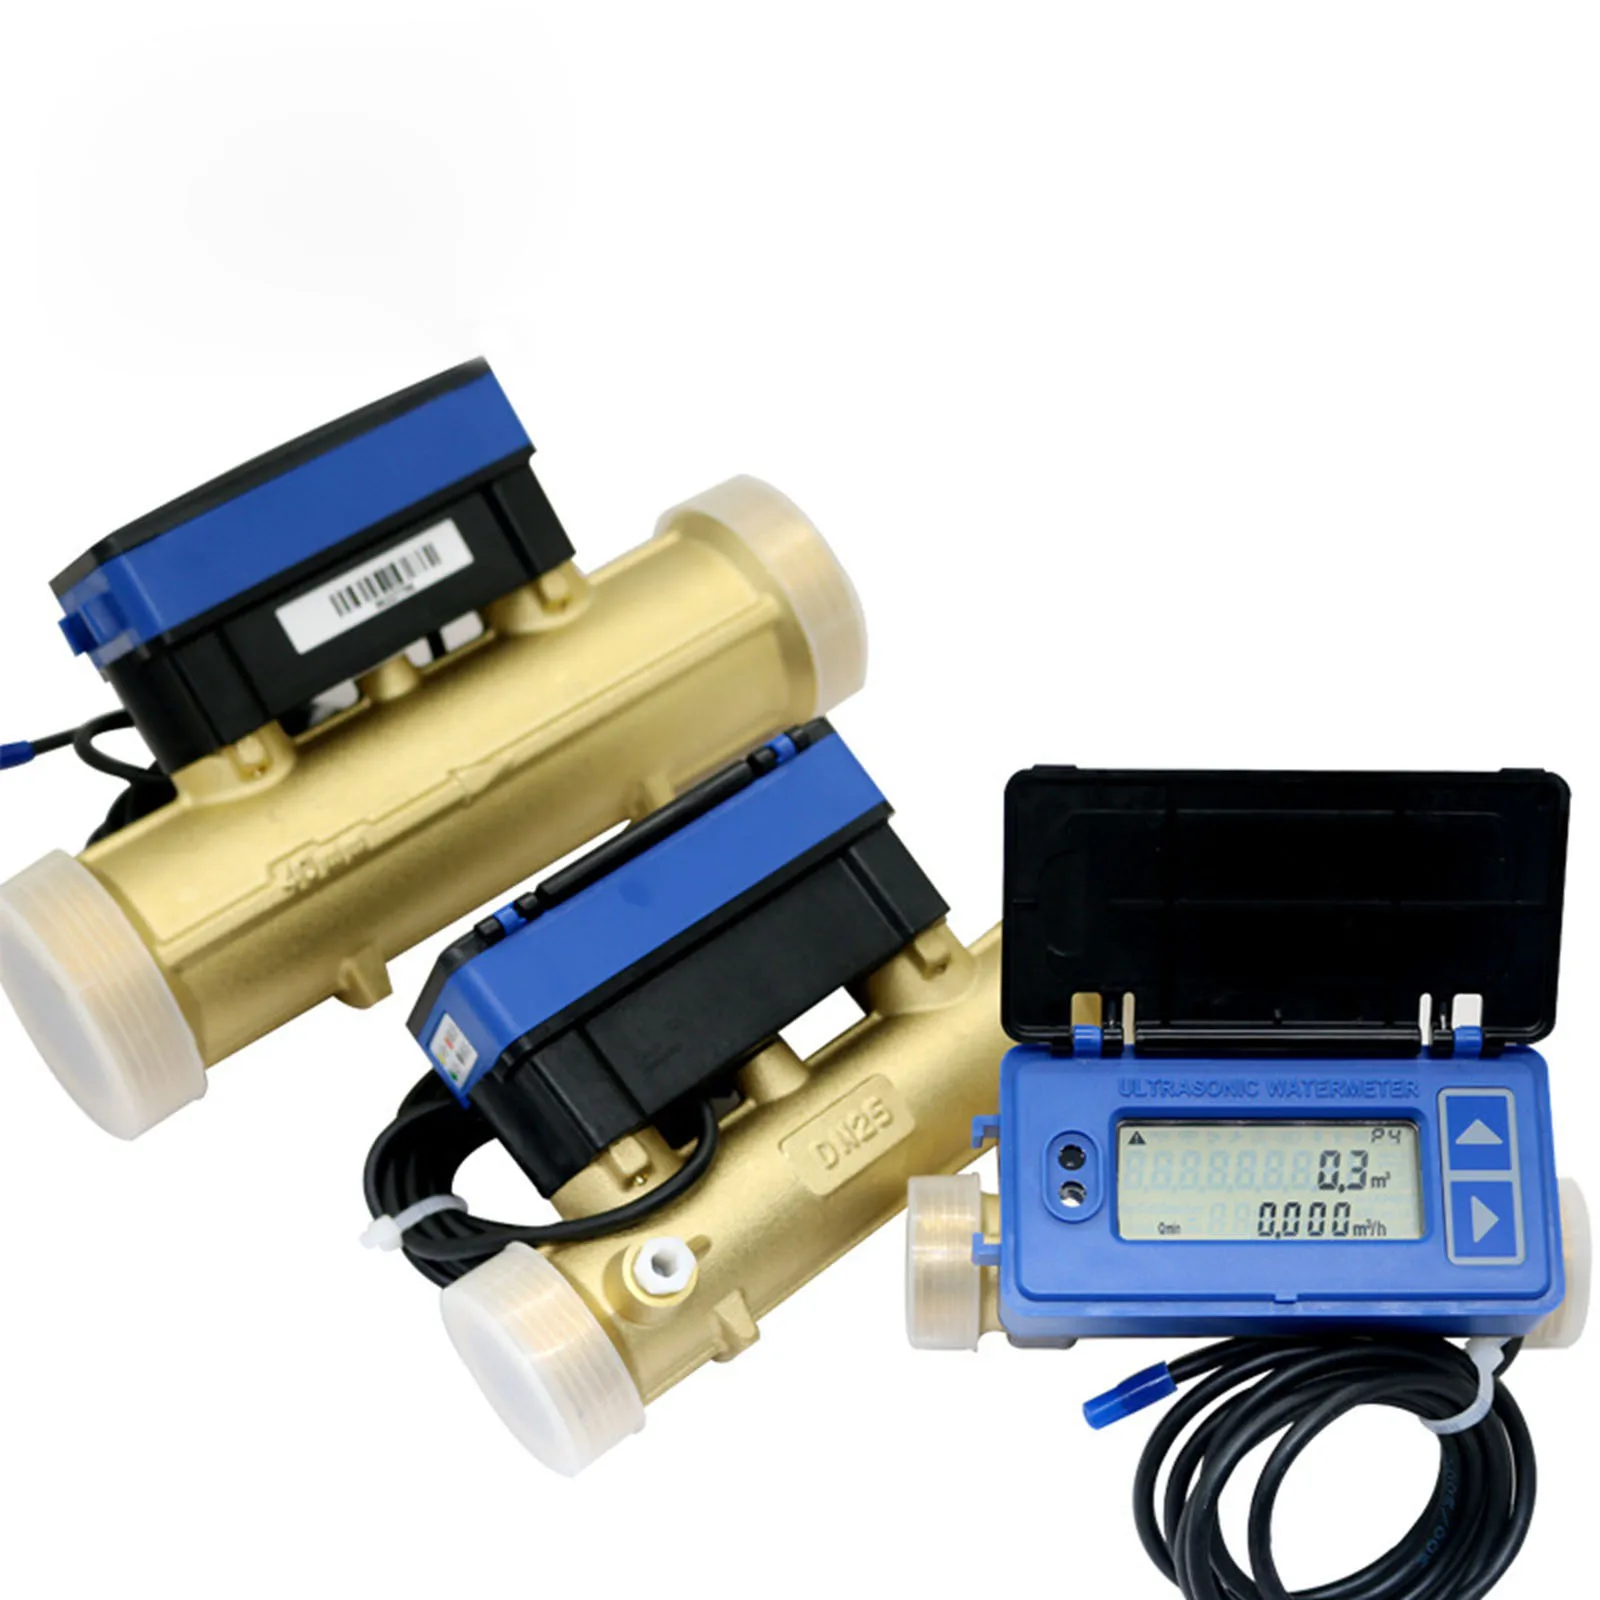 

New Flowmeter Ultrasonic Digital Turbine Water Flow Meter Home Timing Quantitative Intelligent Remote Sensor Liquid Flowmeter